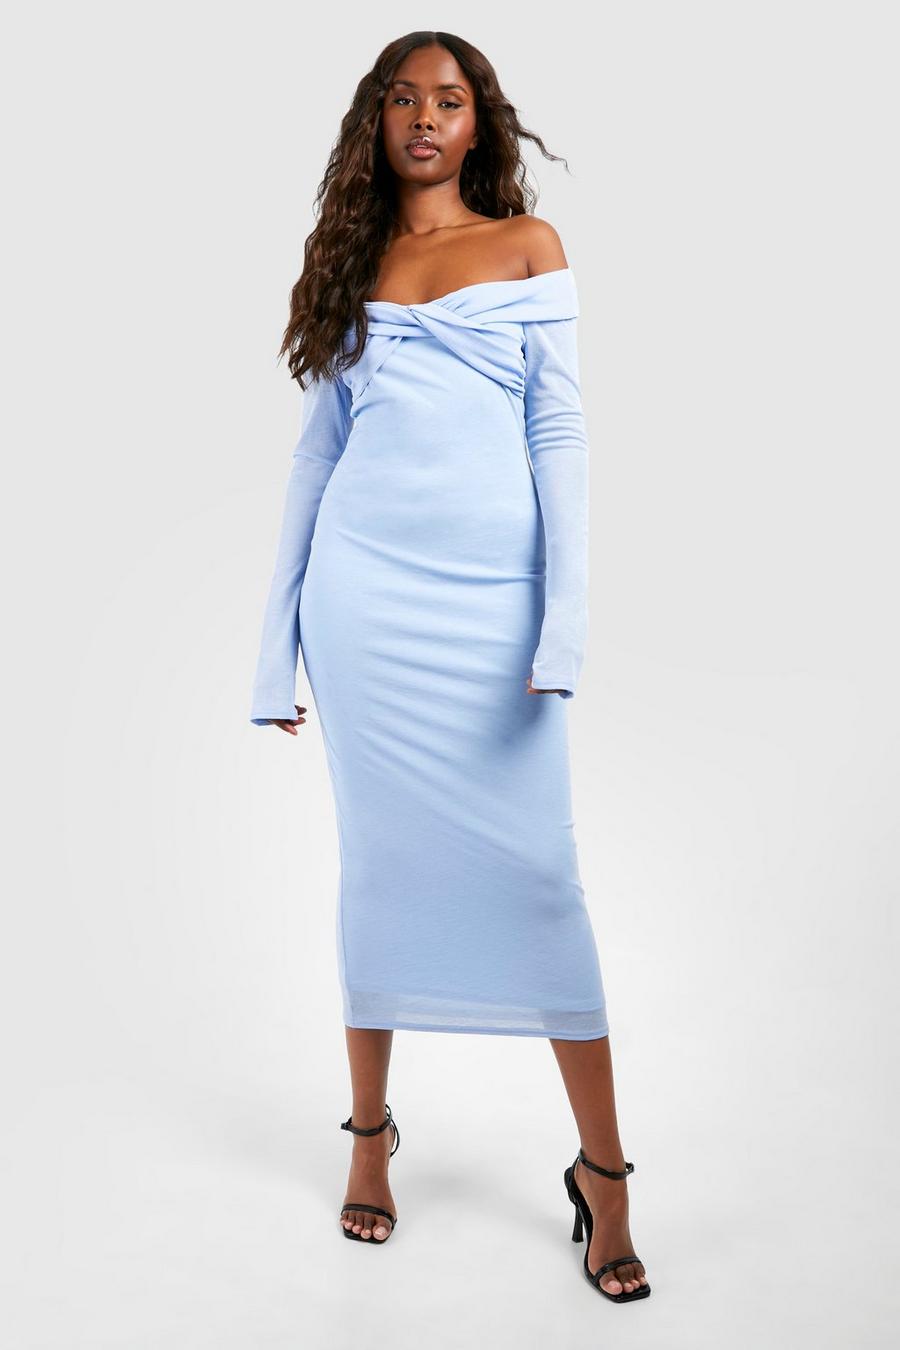 Slate blue Twist Detail Bardot Sheer Mesh Midaxi Dress